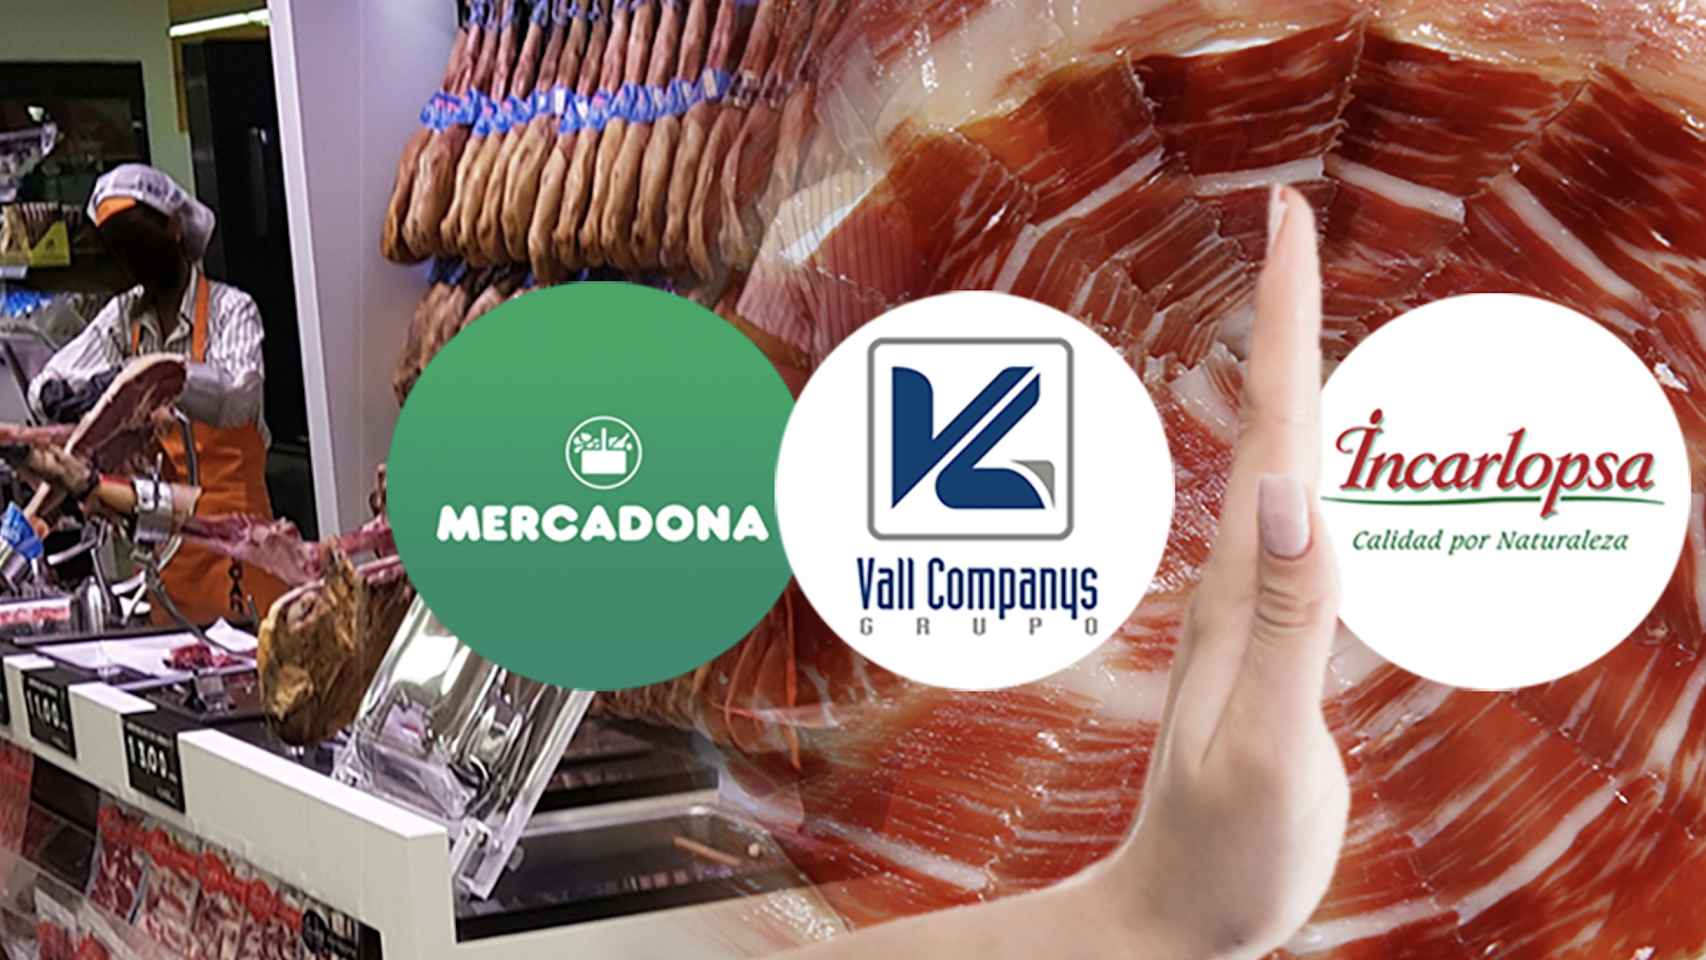 Los logos de Vall Companys, Mercadona e Incarlopsa frente a patas de jamón / FOTOMONTAJE CG